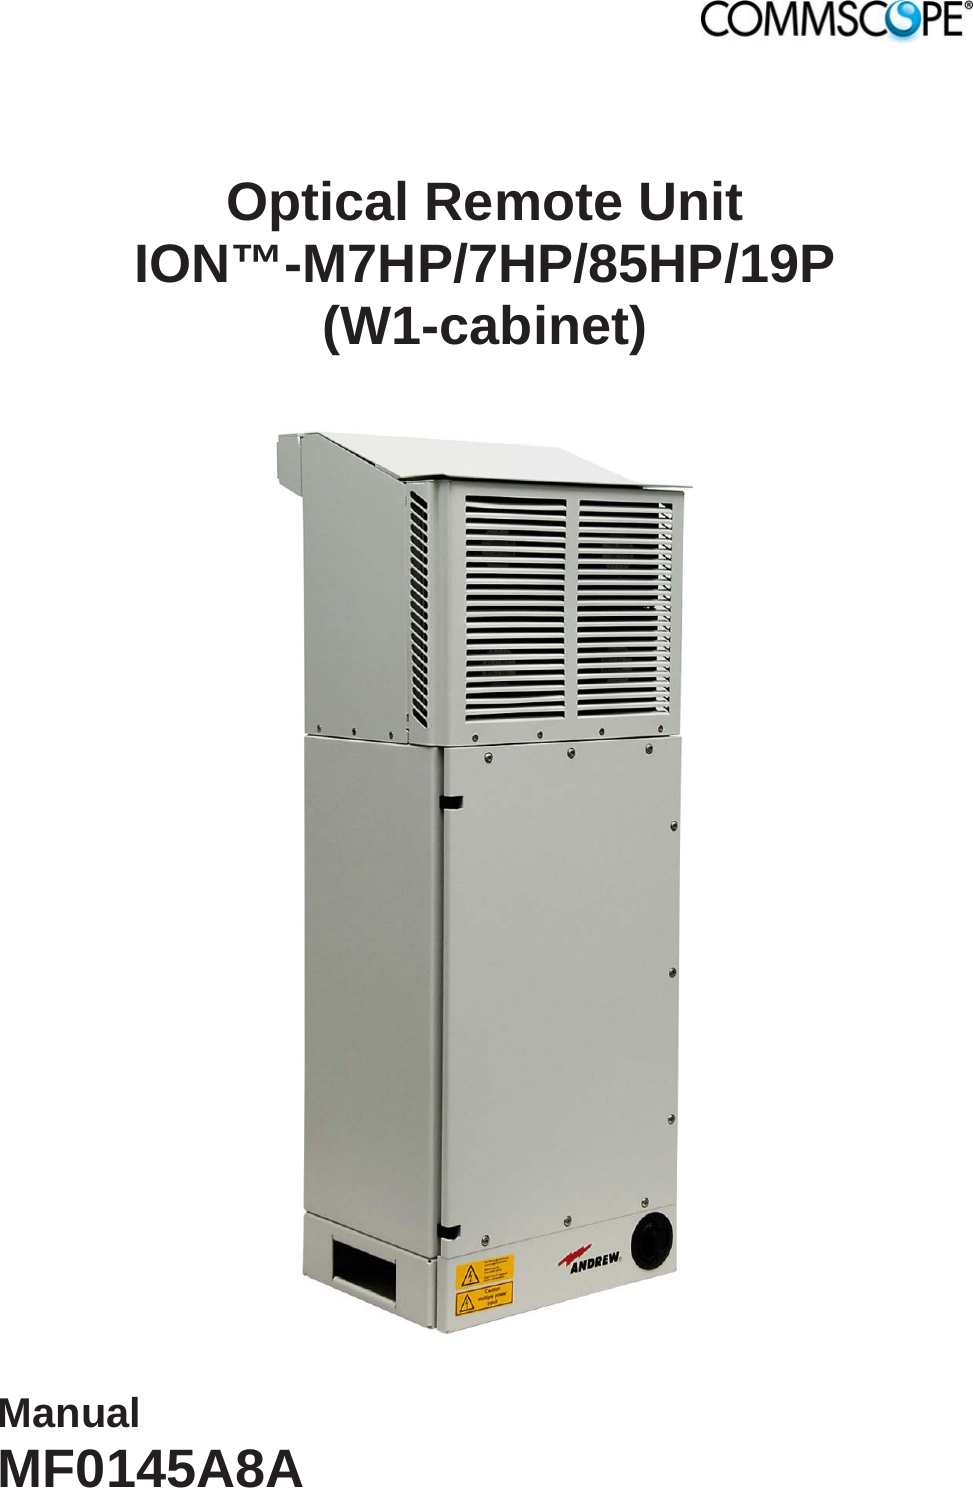   Optical Remote Unit ION™-M7HP/7HP/85HP/19P (W1-cabinet)    Manual MF0145A8A  